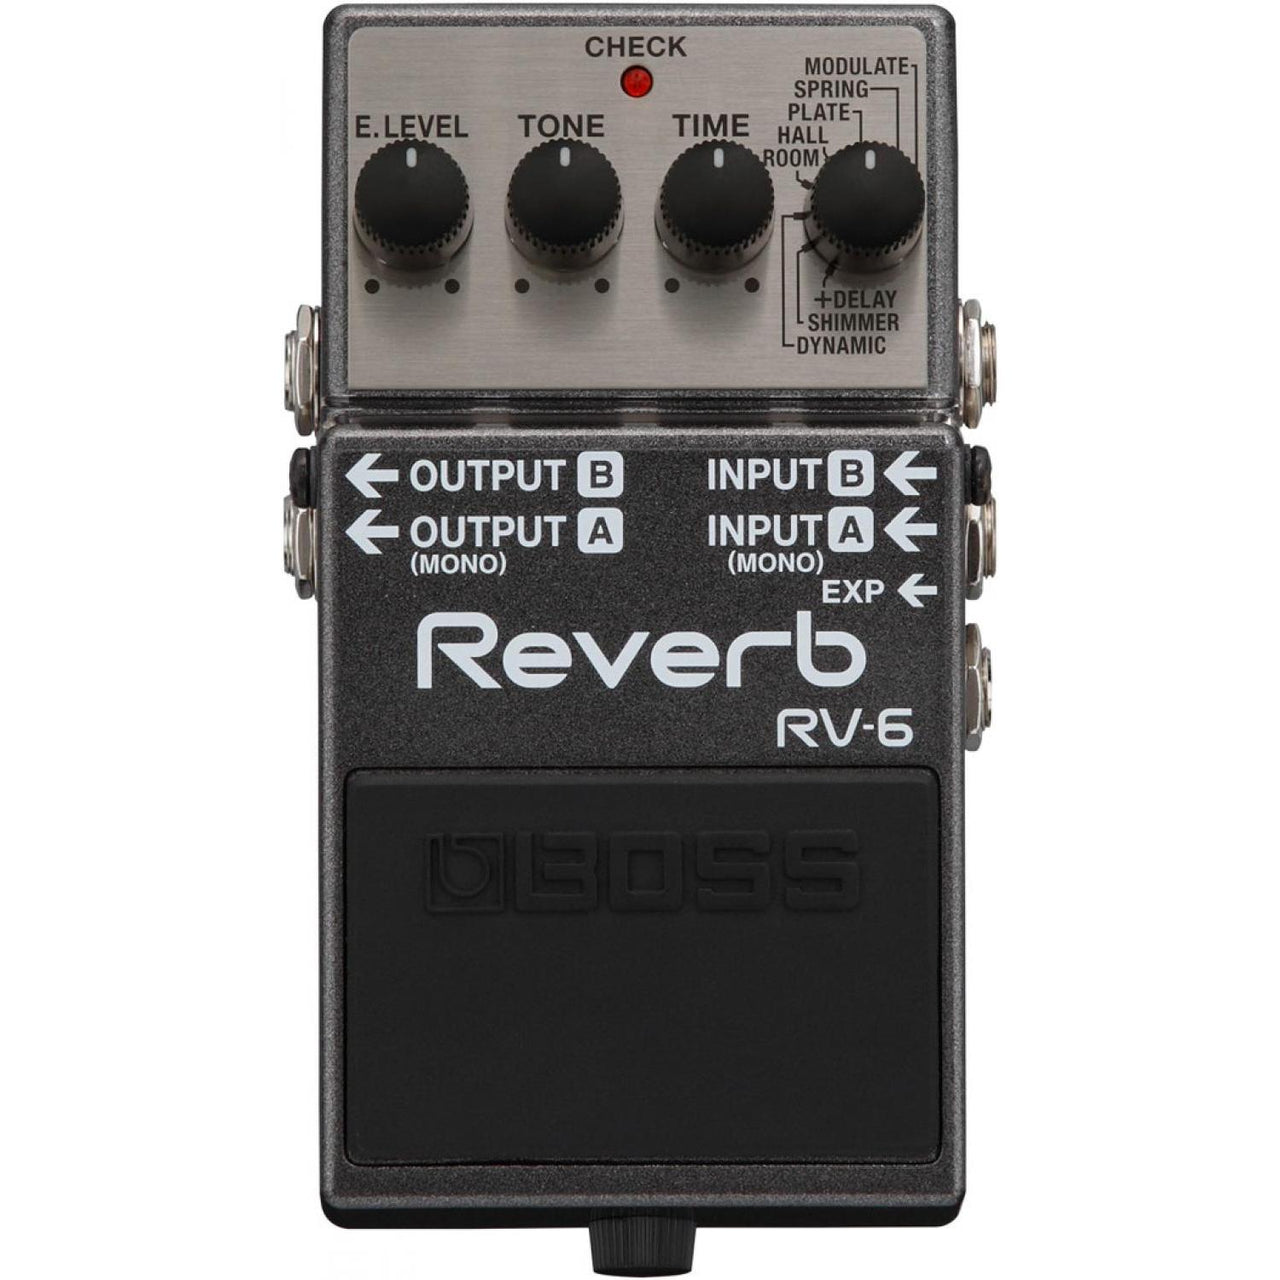 Pedal Boss P/guitarra Compacto Reverb, Rv-6